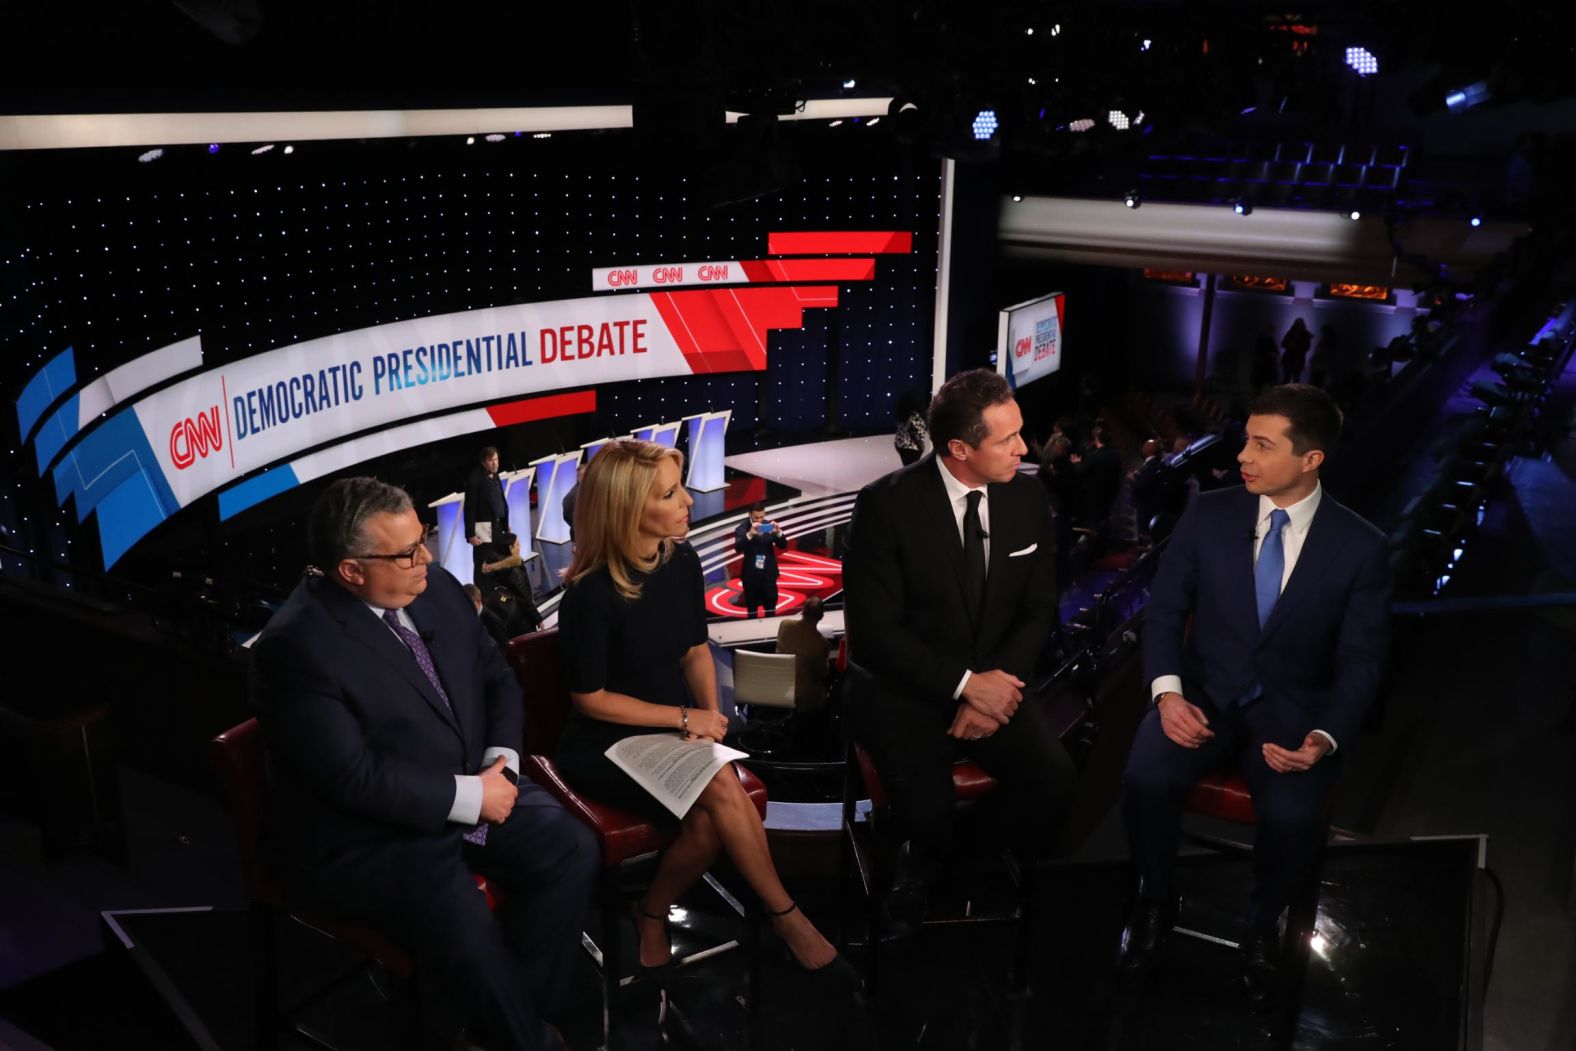 Buttigieg is interviewed by CNN after the debate.